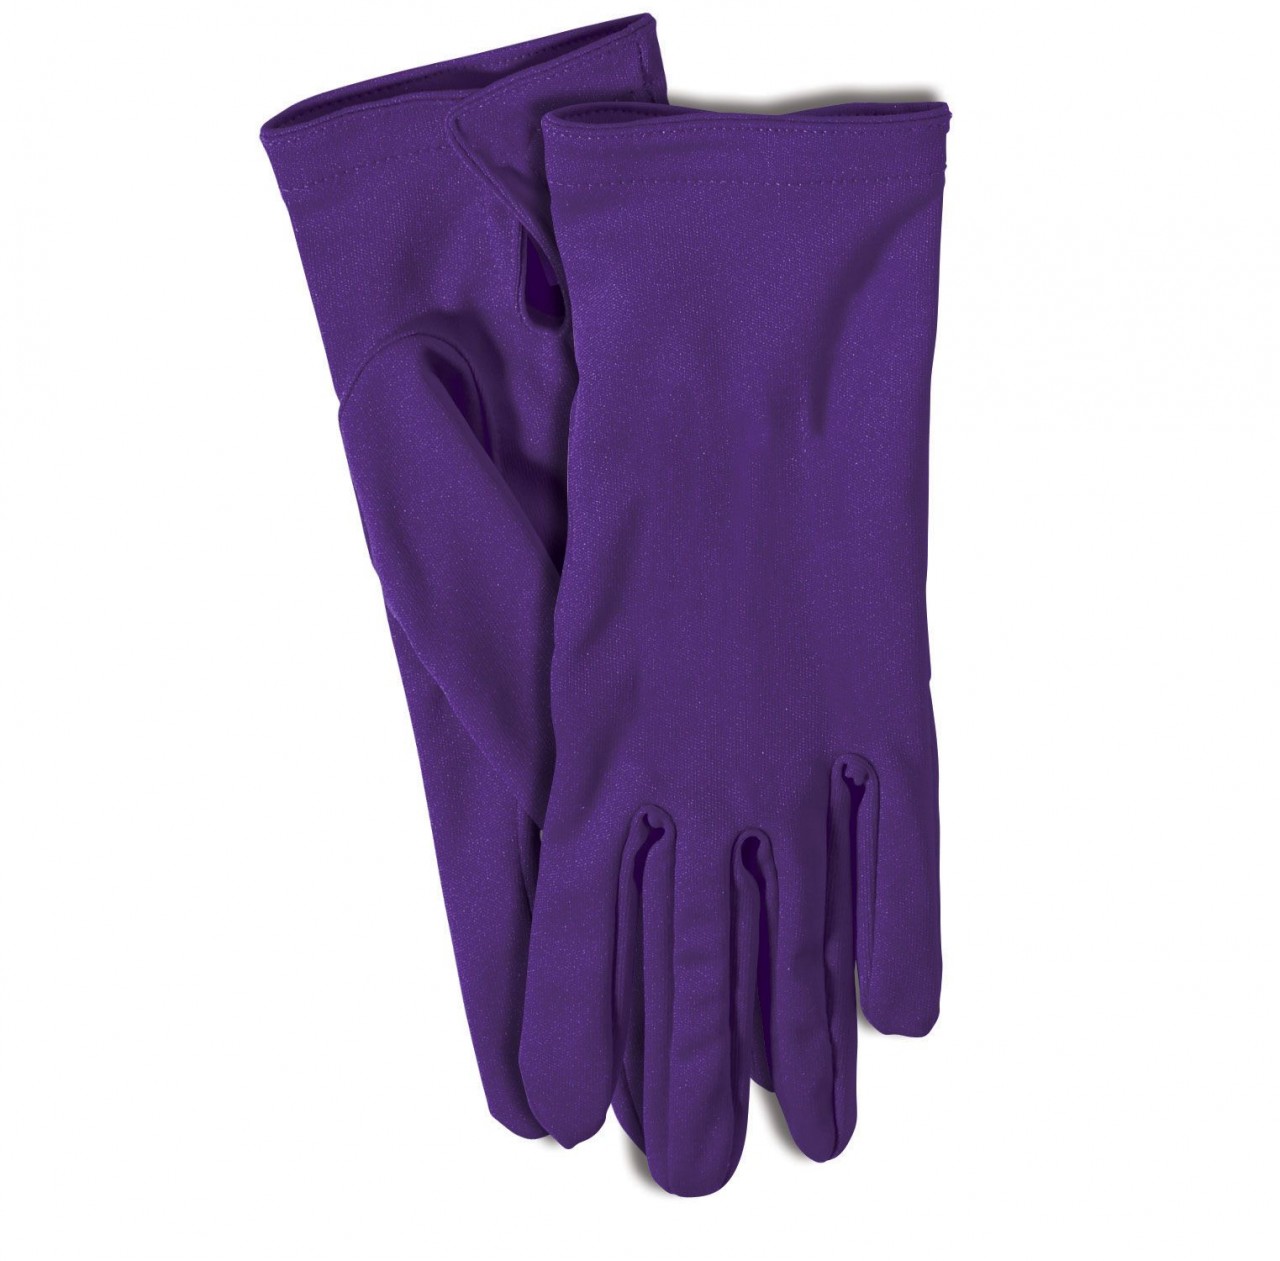 Short Purple Gloves